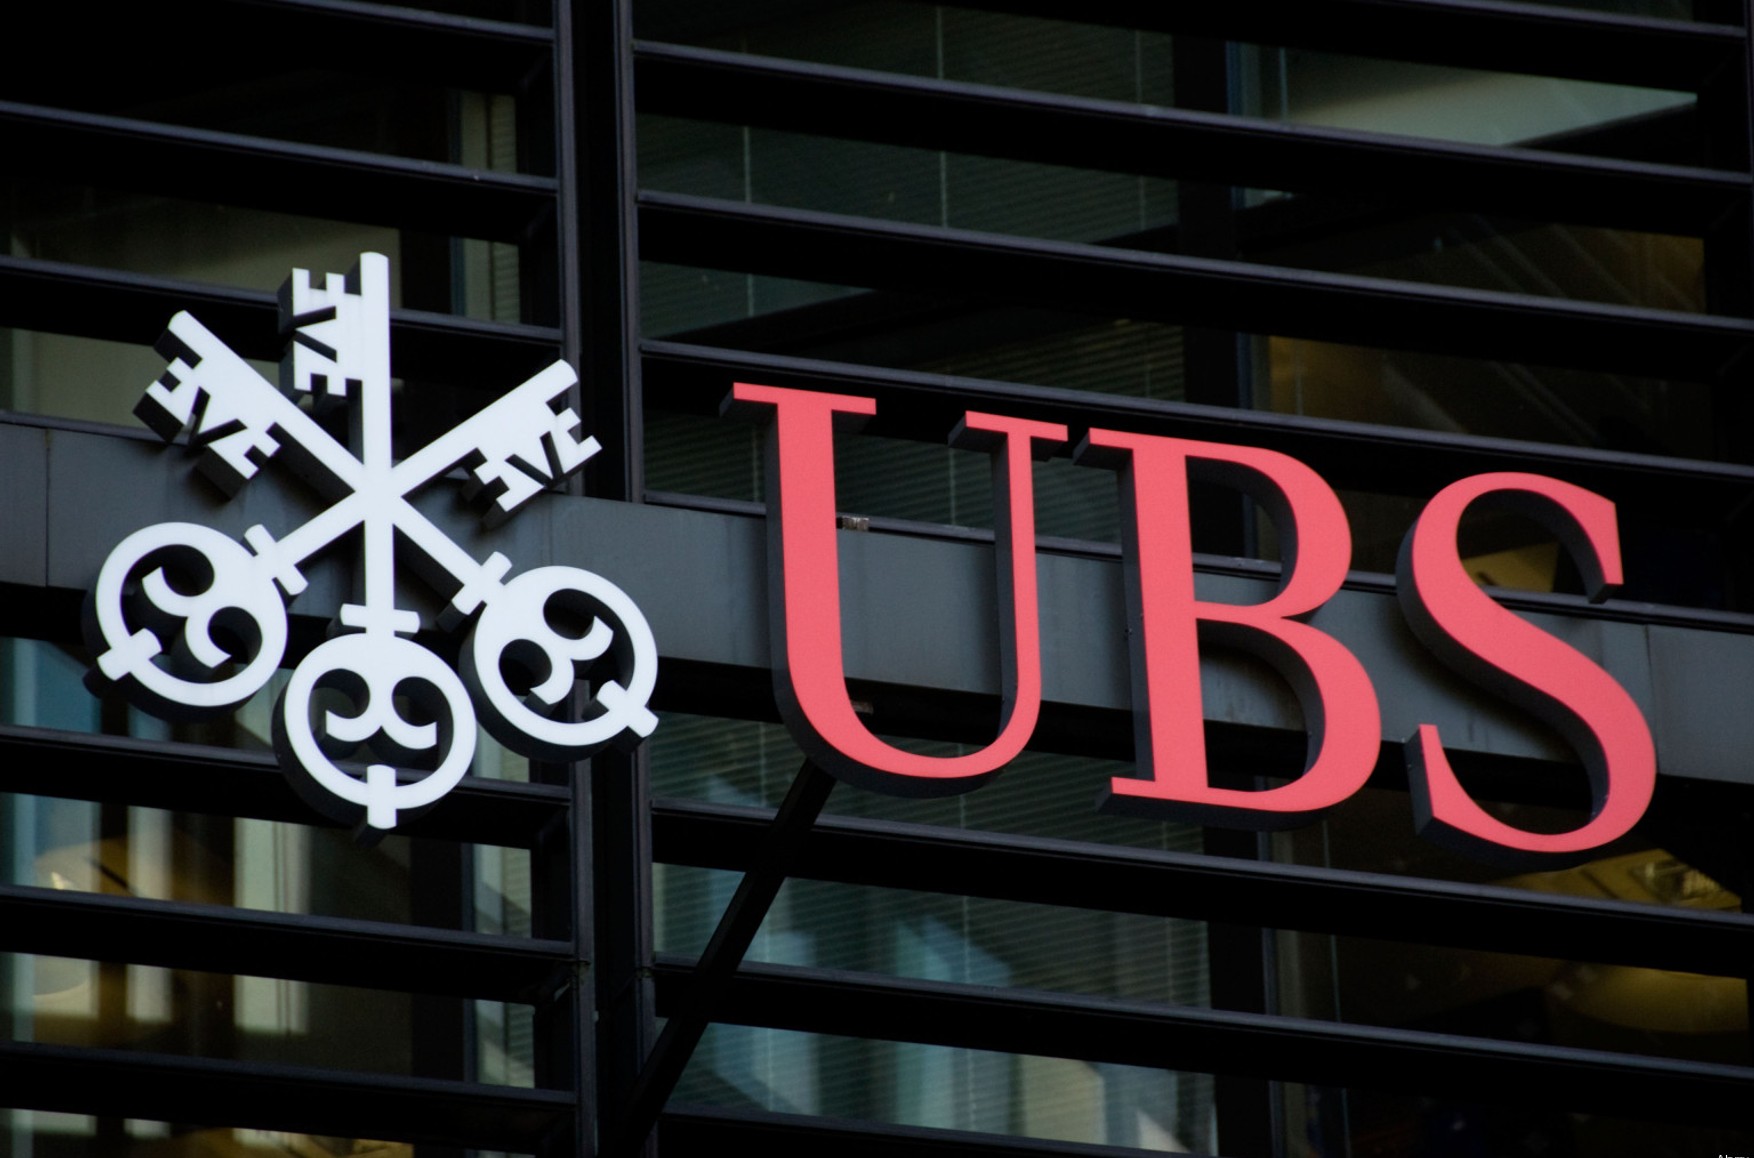 Банку ubs. Банк ЮБС Швейцария. UBS AG банк Швейцарии. Швейцарского банка UBS. Швейцарские банки ЮБС.